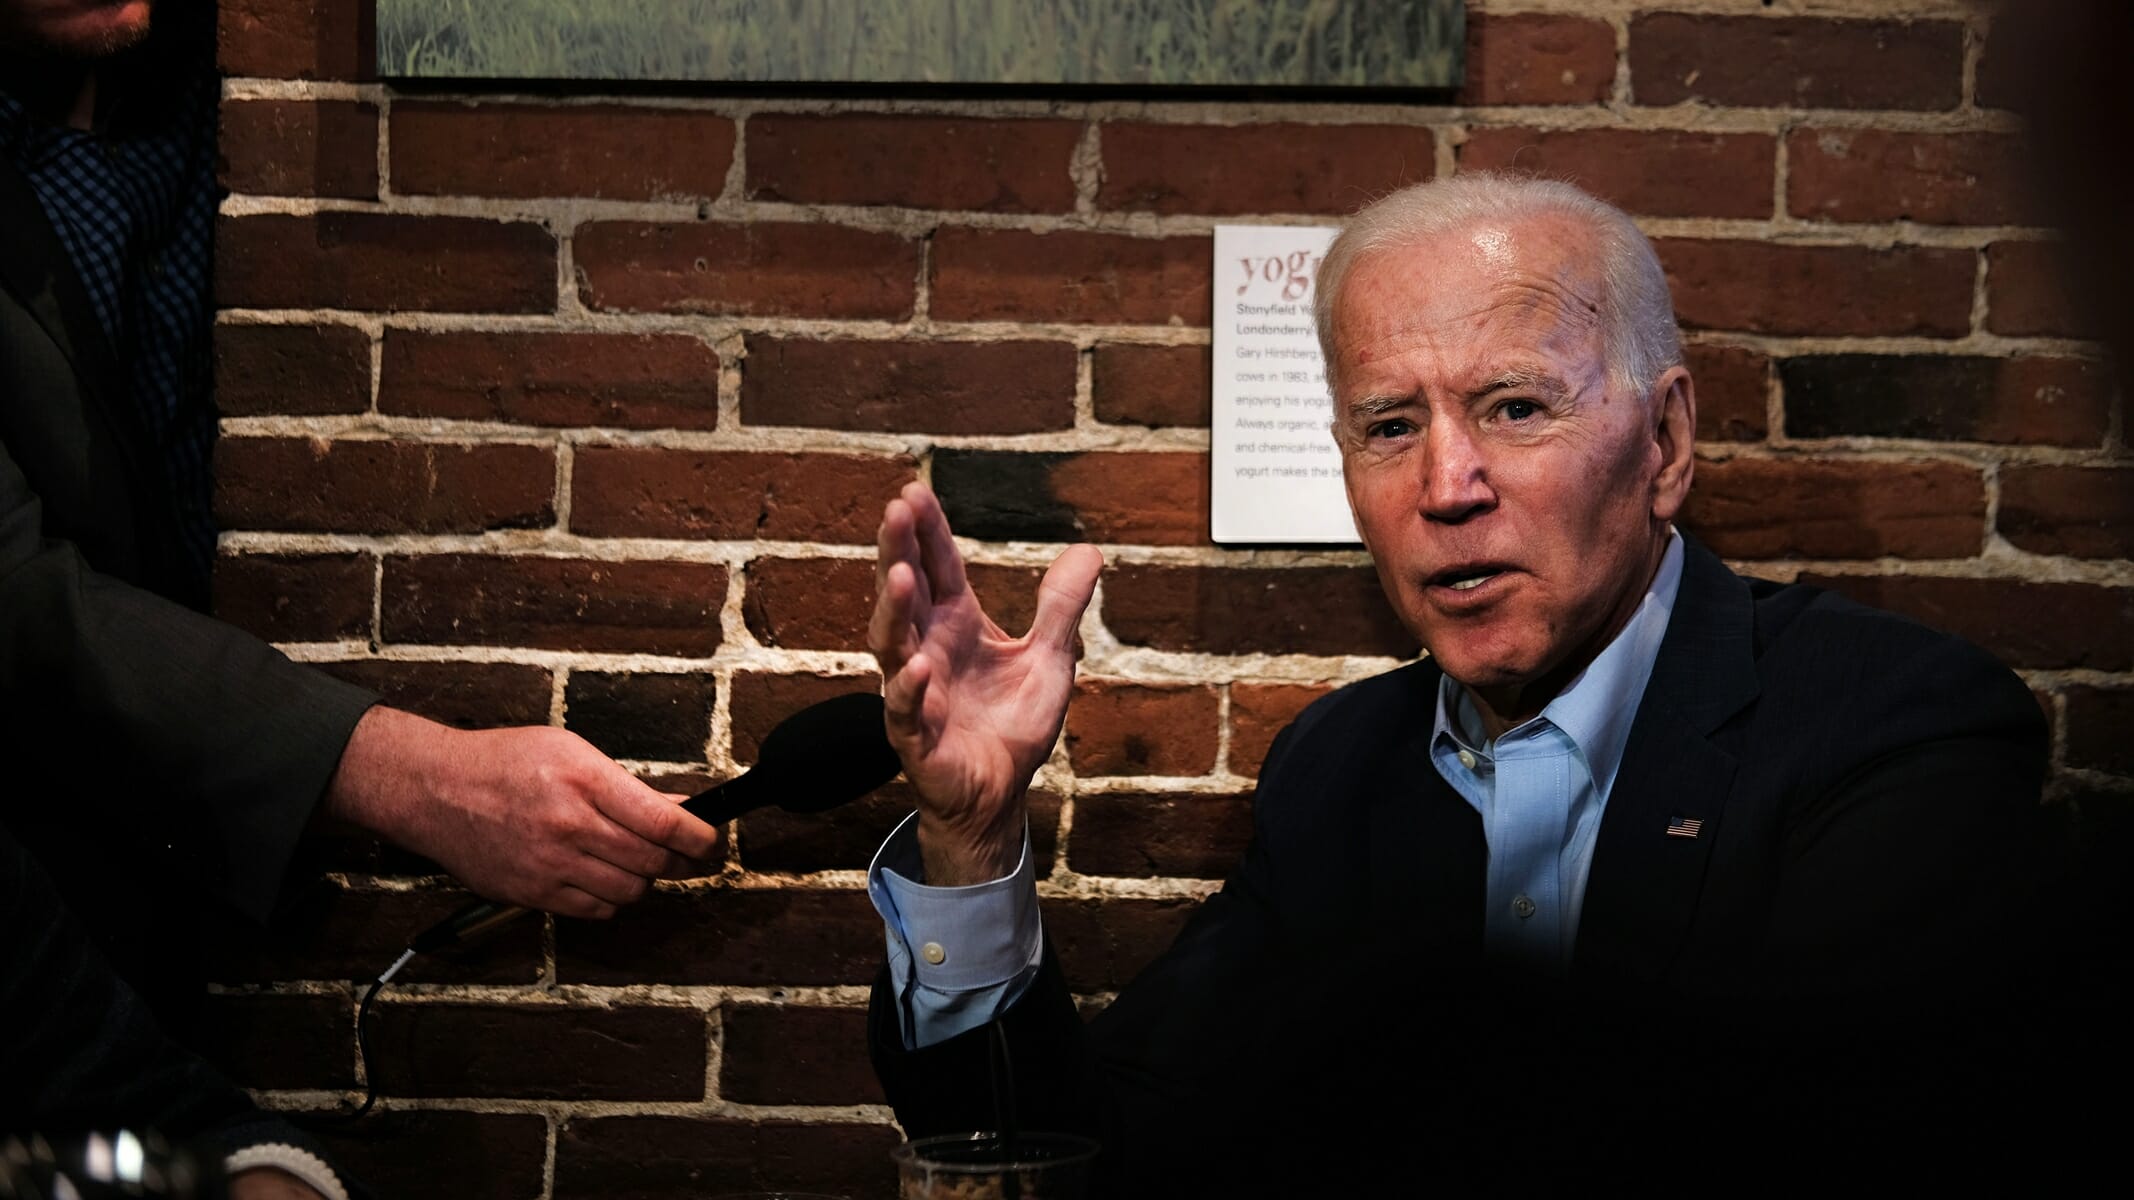 Joe Biden Is Running the Most Radical Campaign of Any Democrat